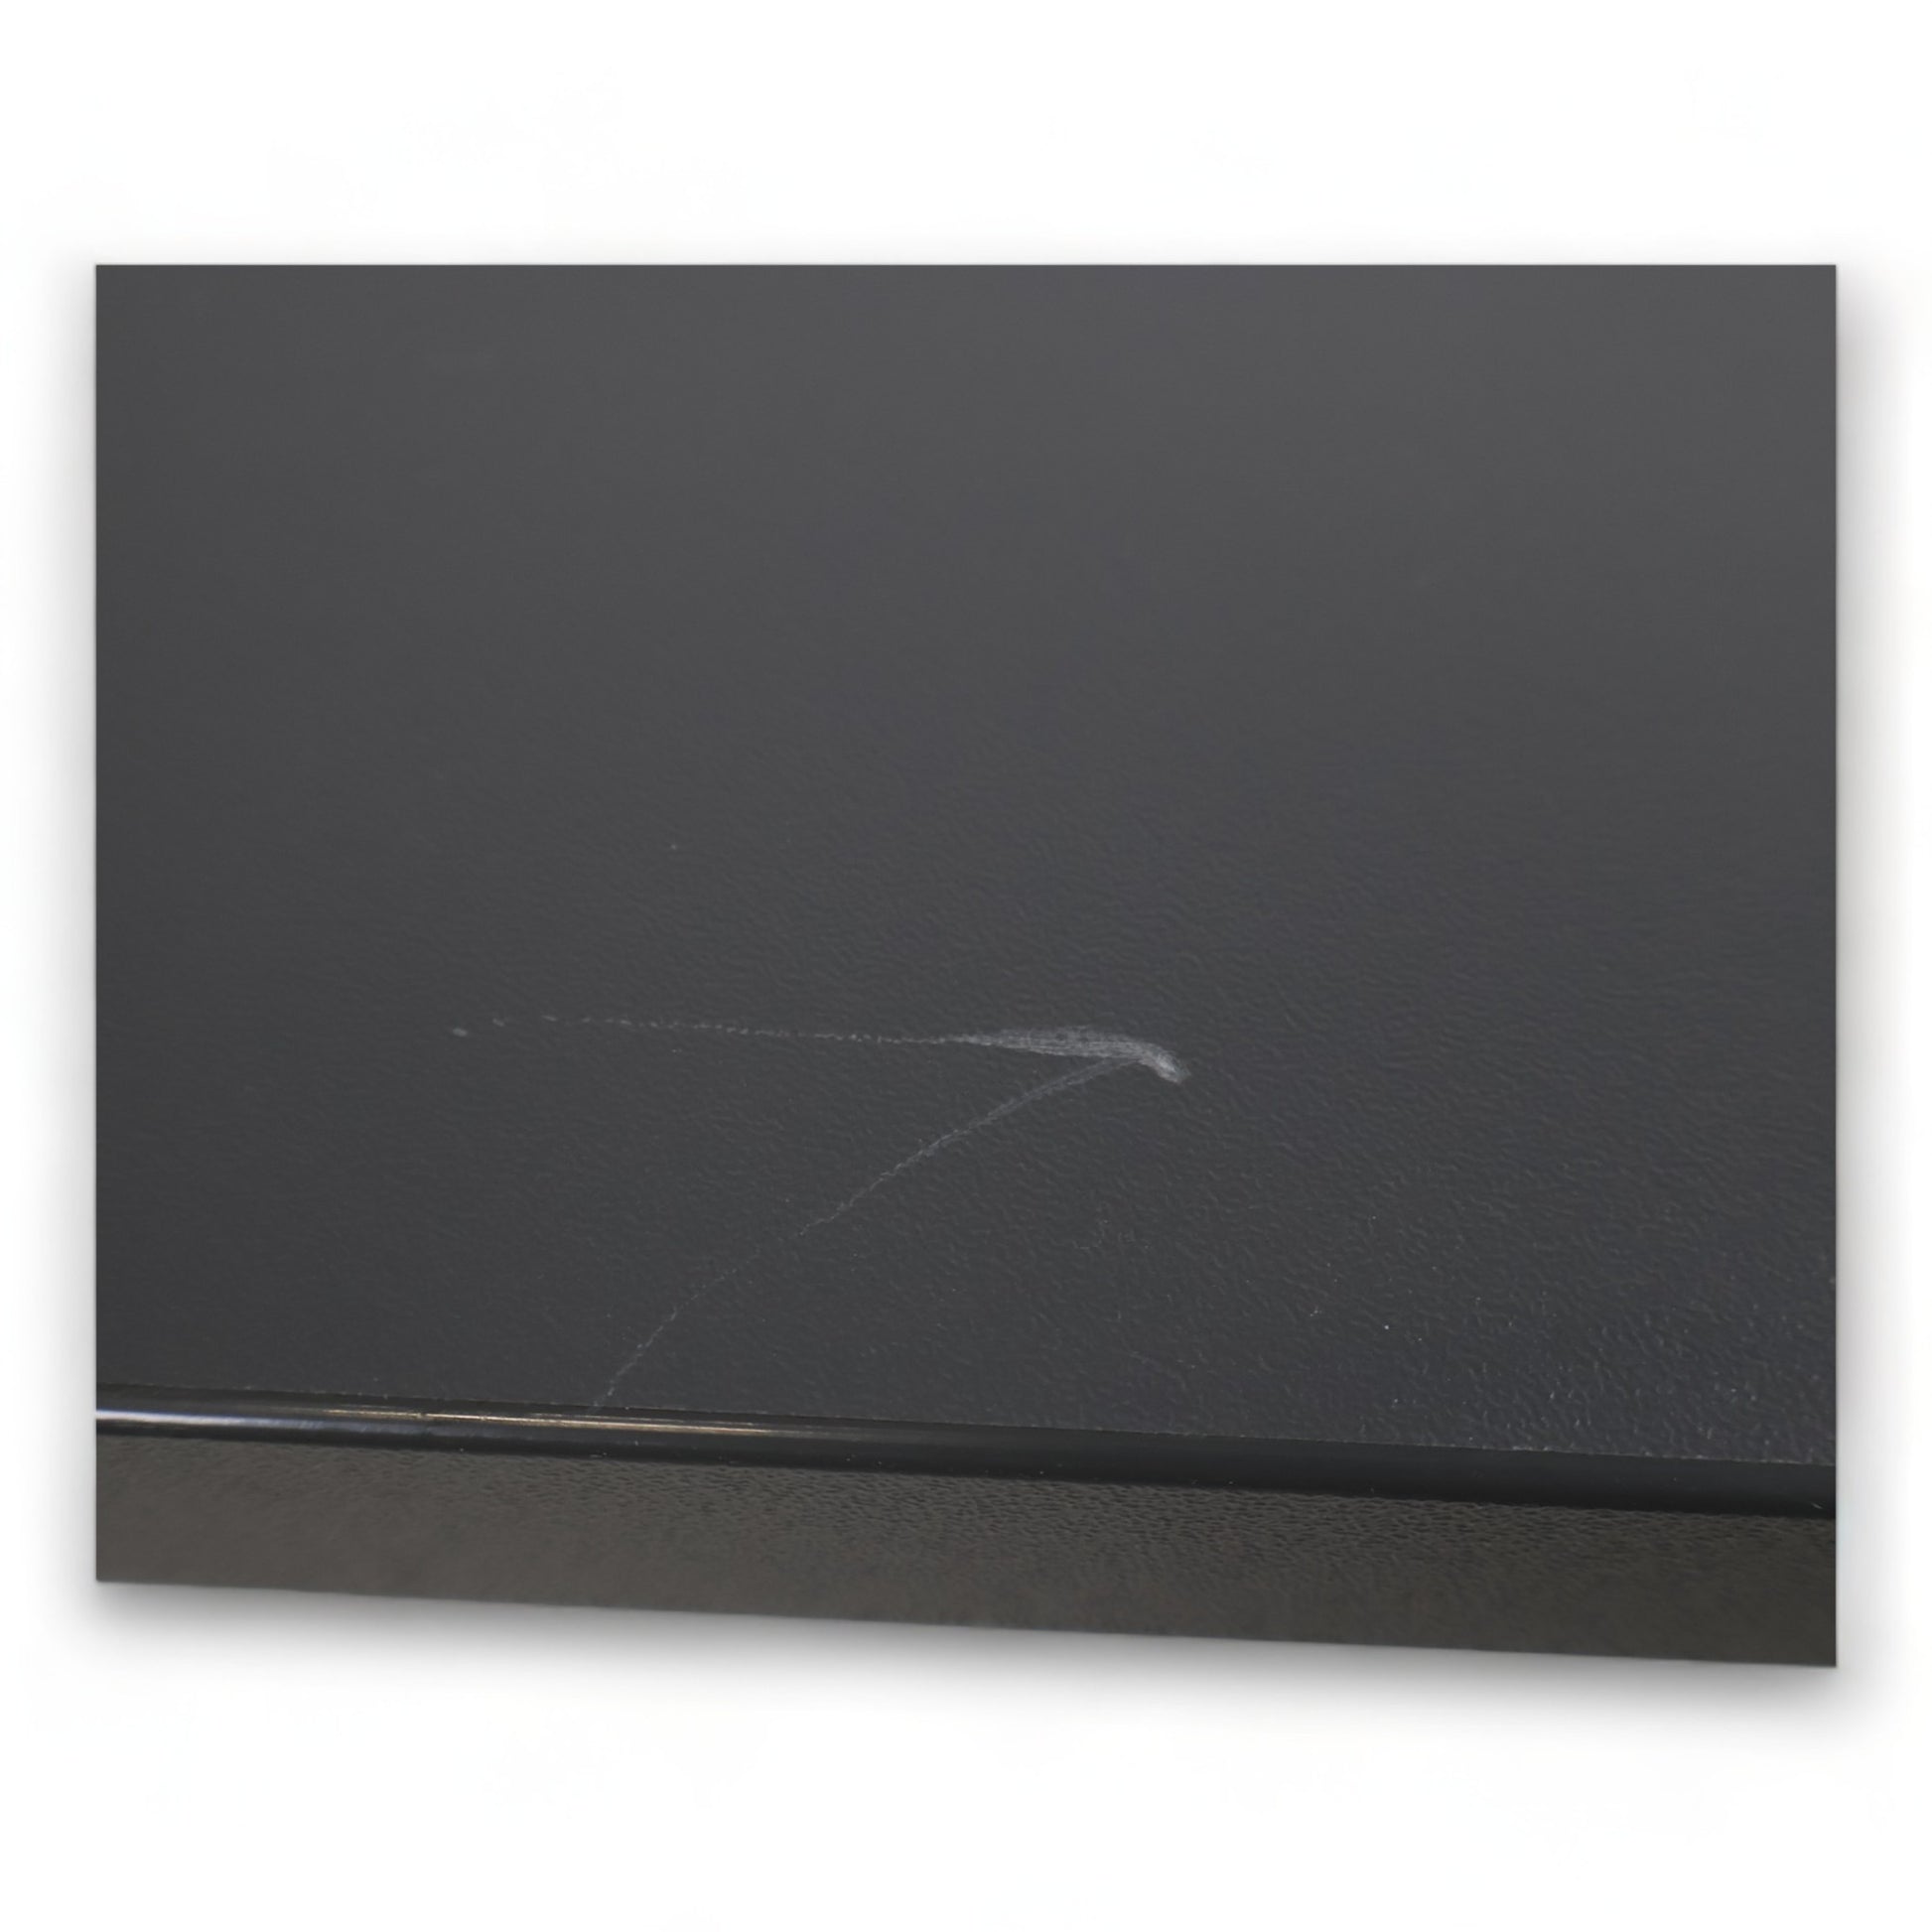 Kvalitetssikret | Flexus skrivebord fra AJ produkter, 120x80cm